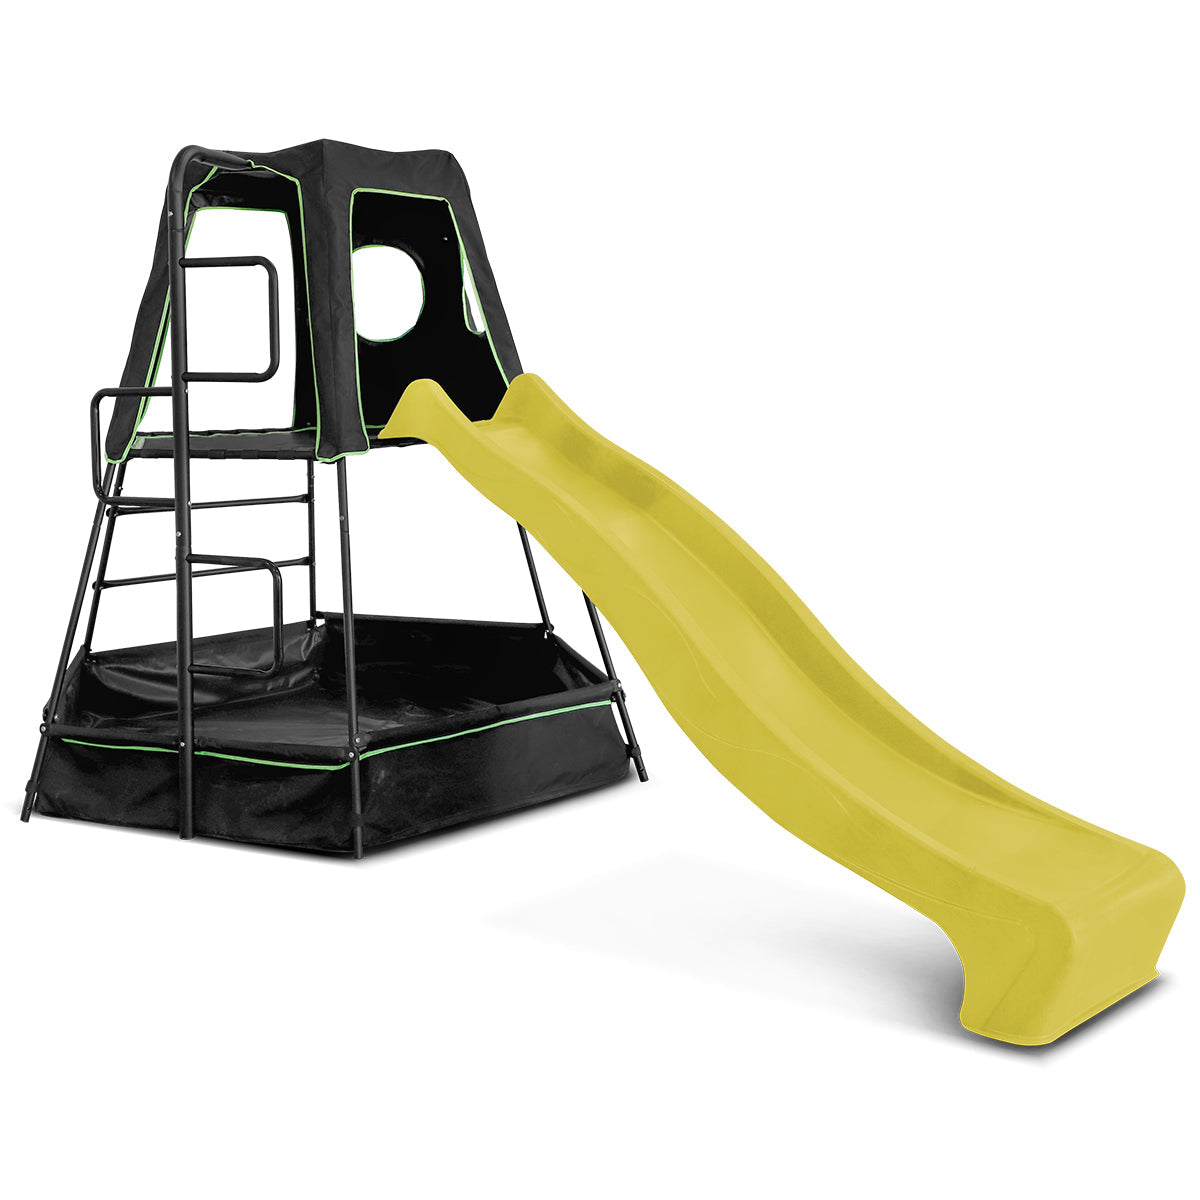 Lifespan Kids Pallas Play Tower (Yellow Slide)